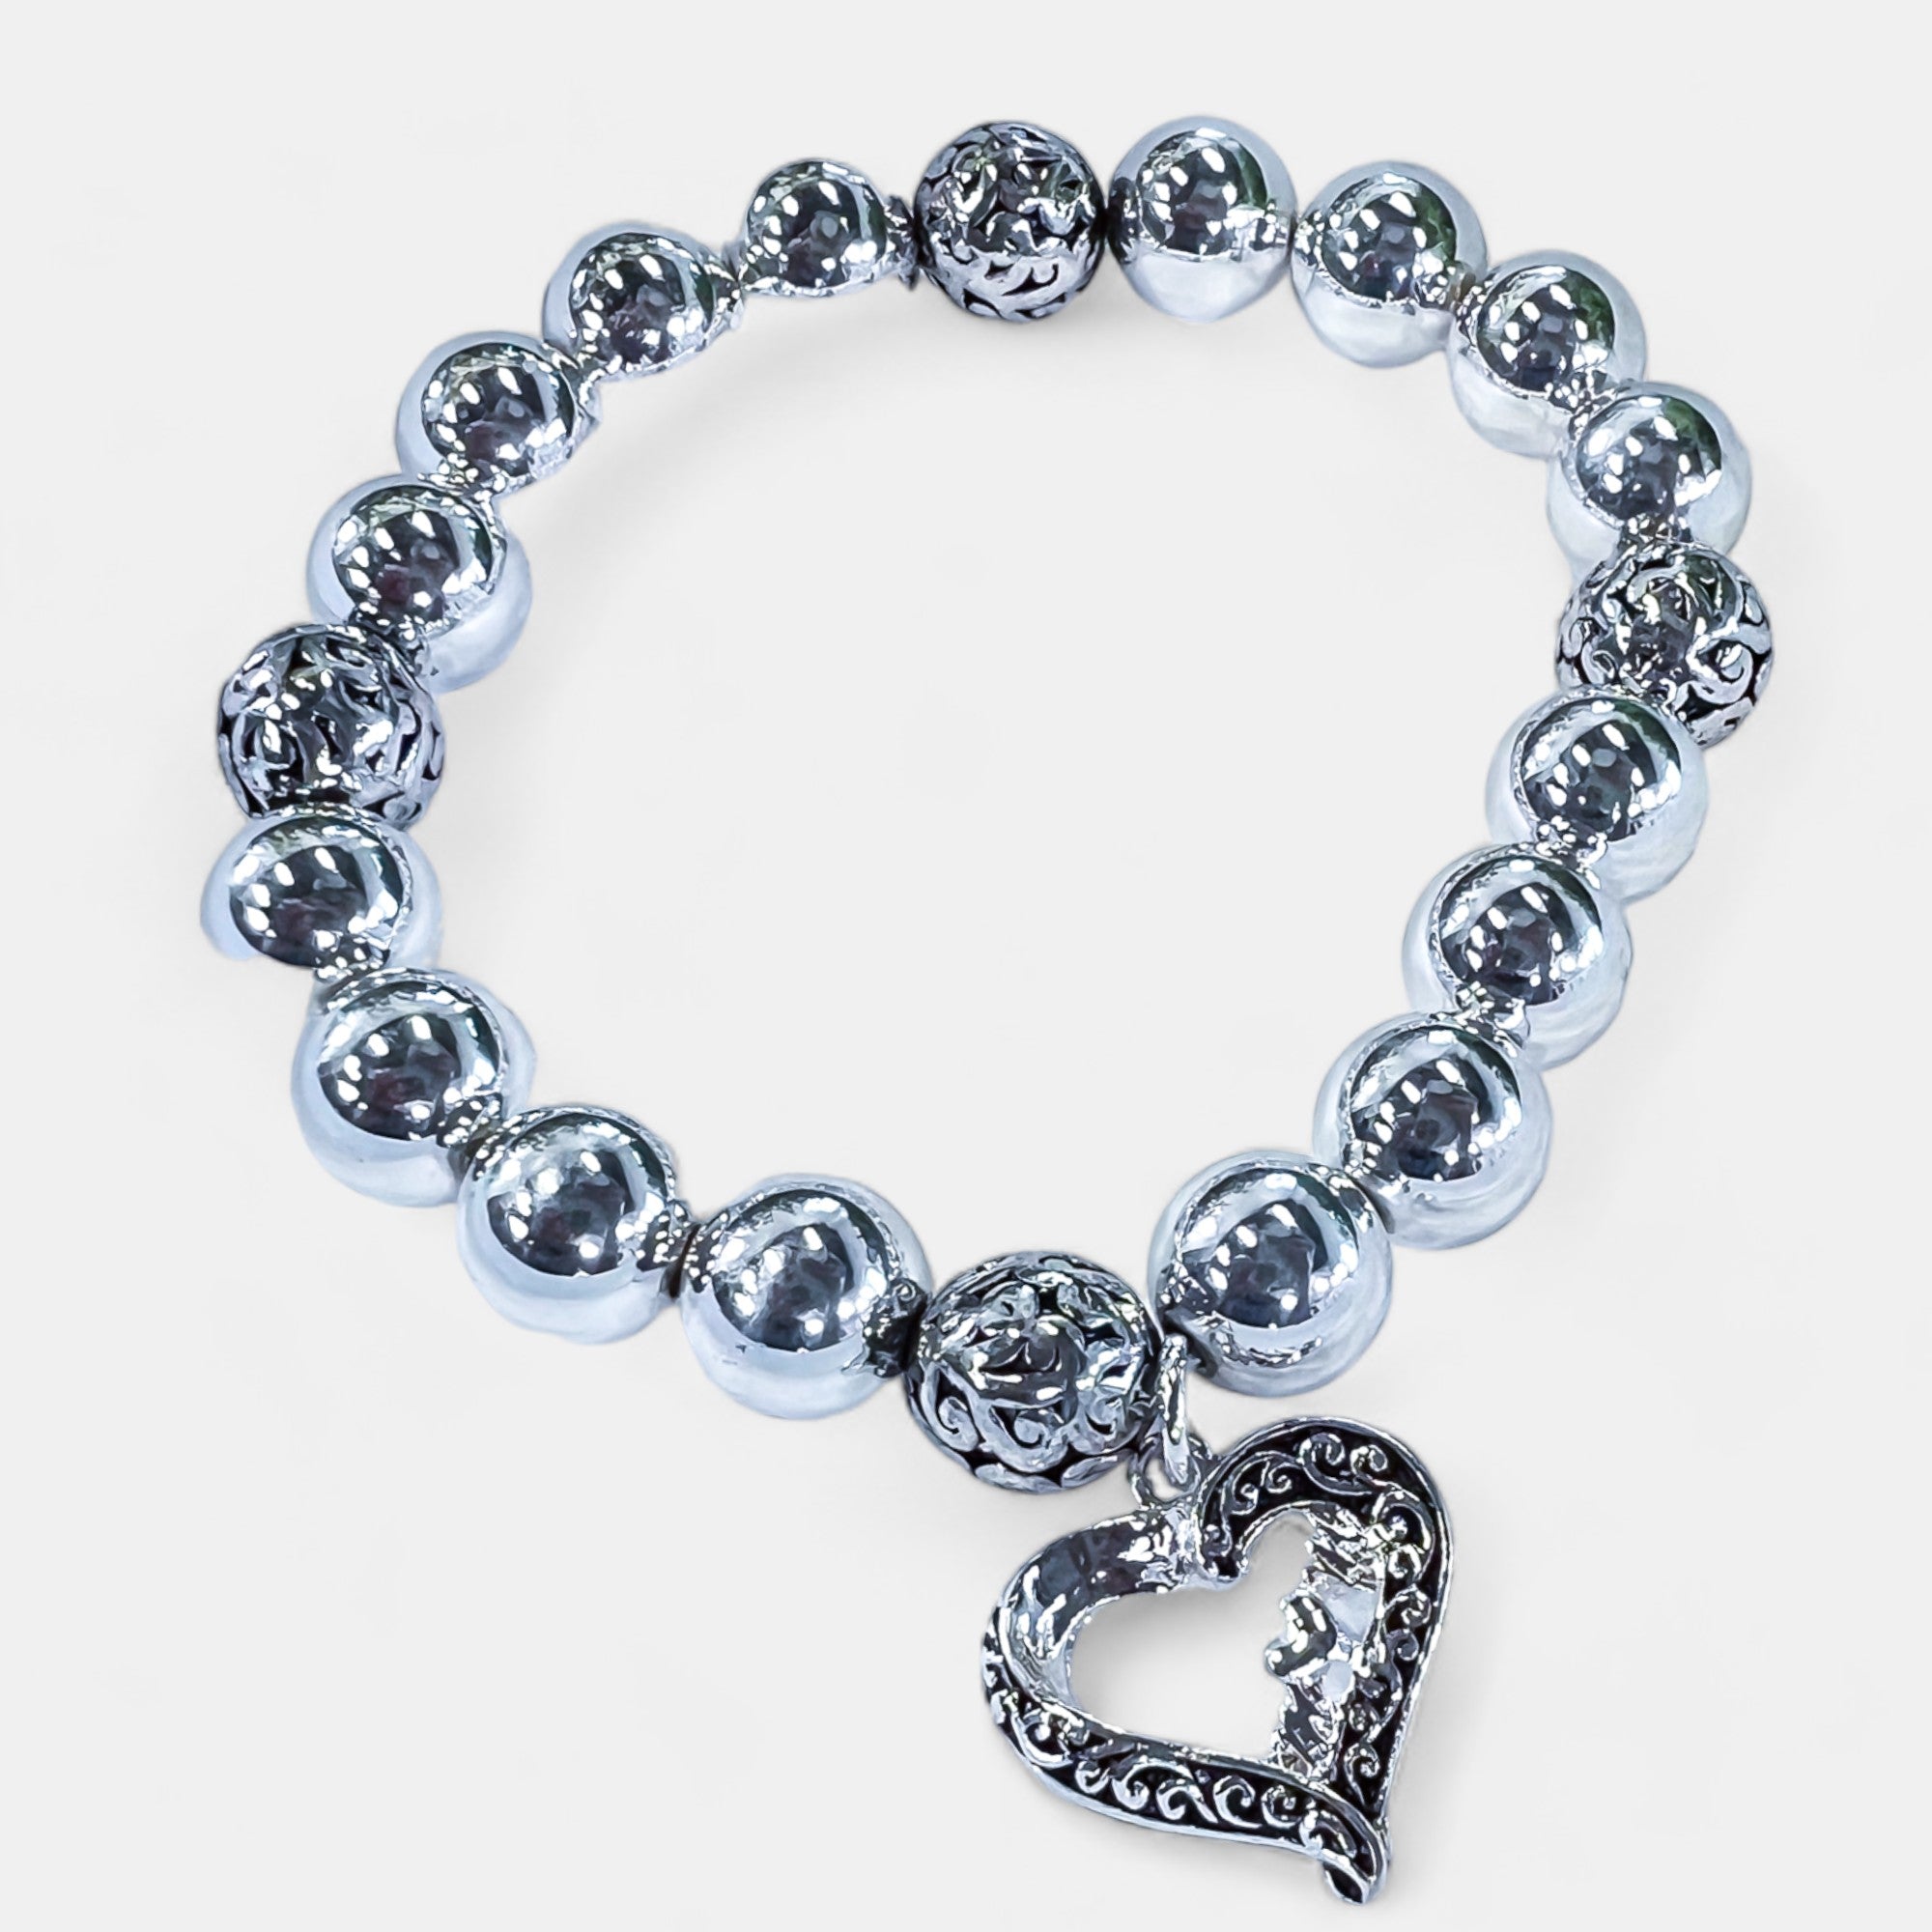 Antique Silver Open Heart Charm Bracelet